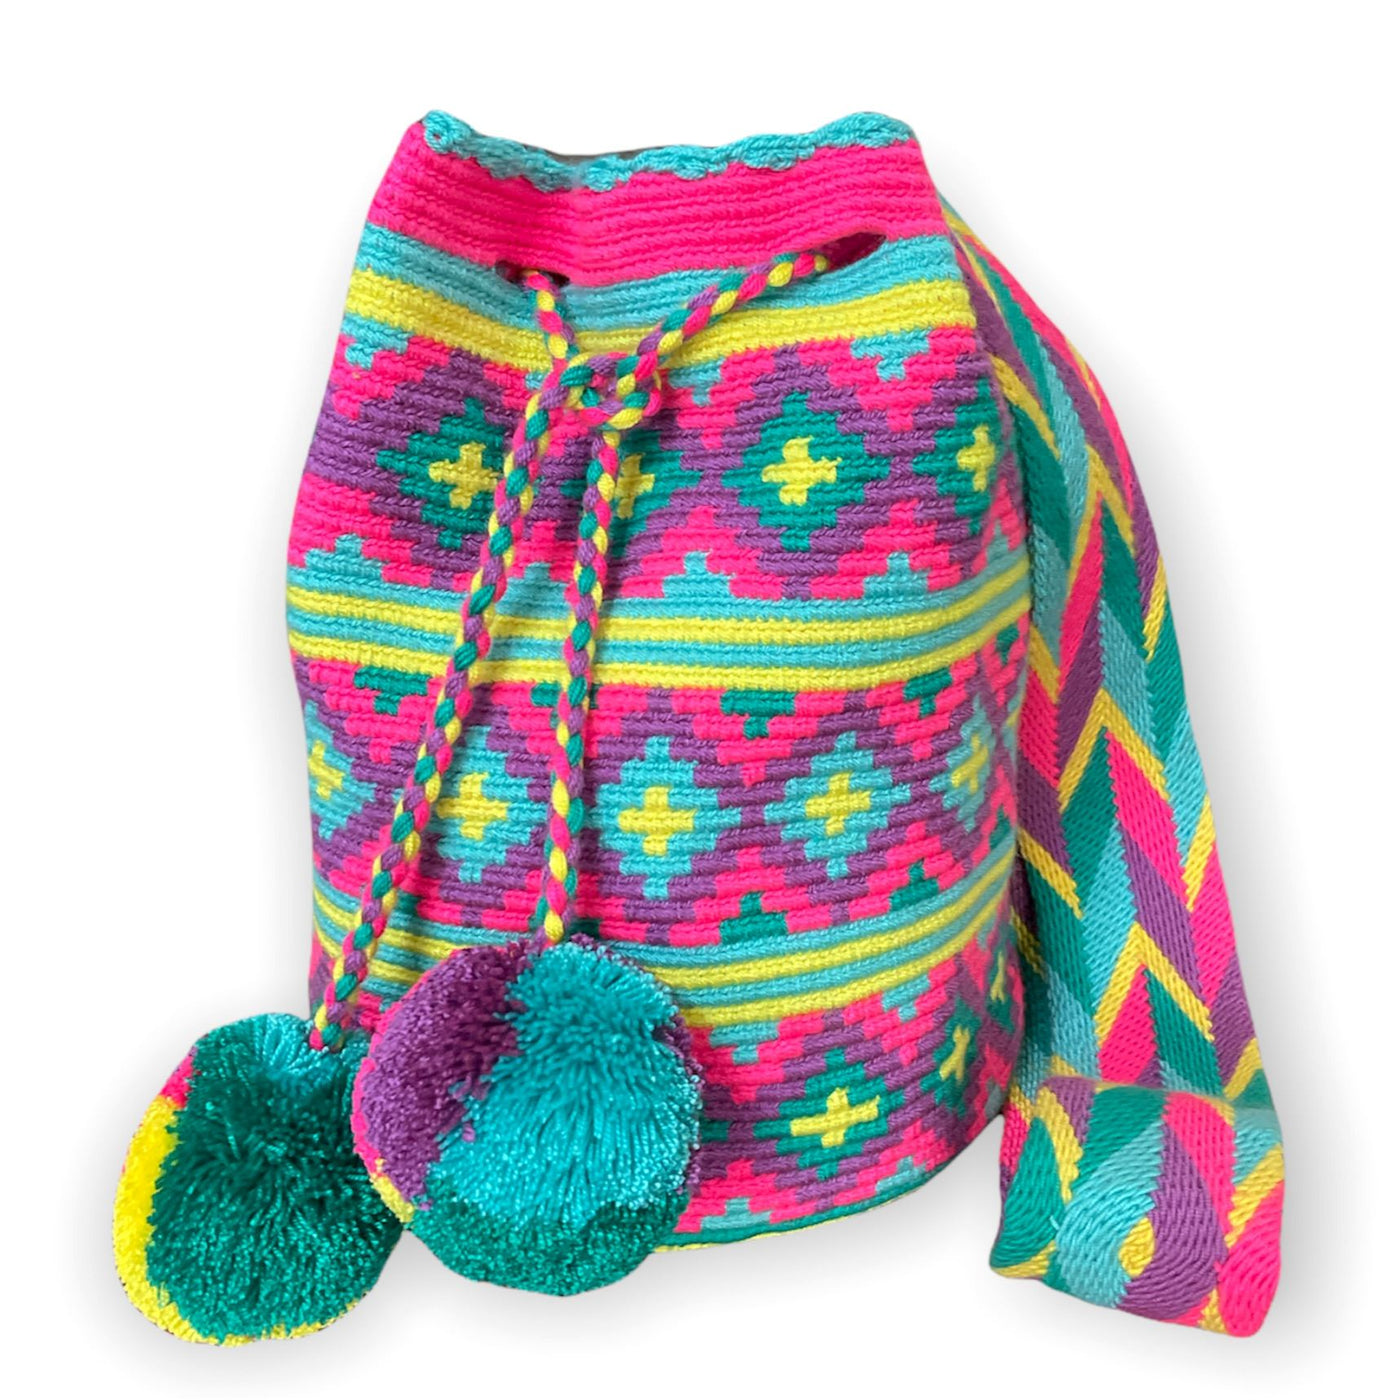 Summer Boho Beach Bag | Crochet Tote Bag by Colorful4u 